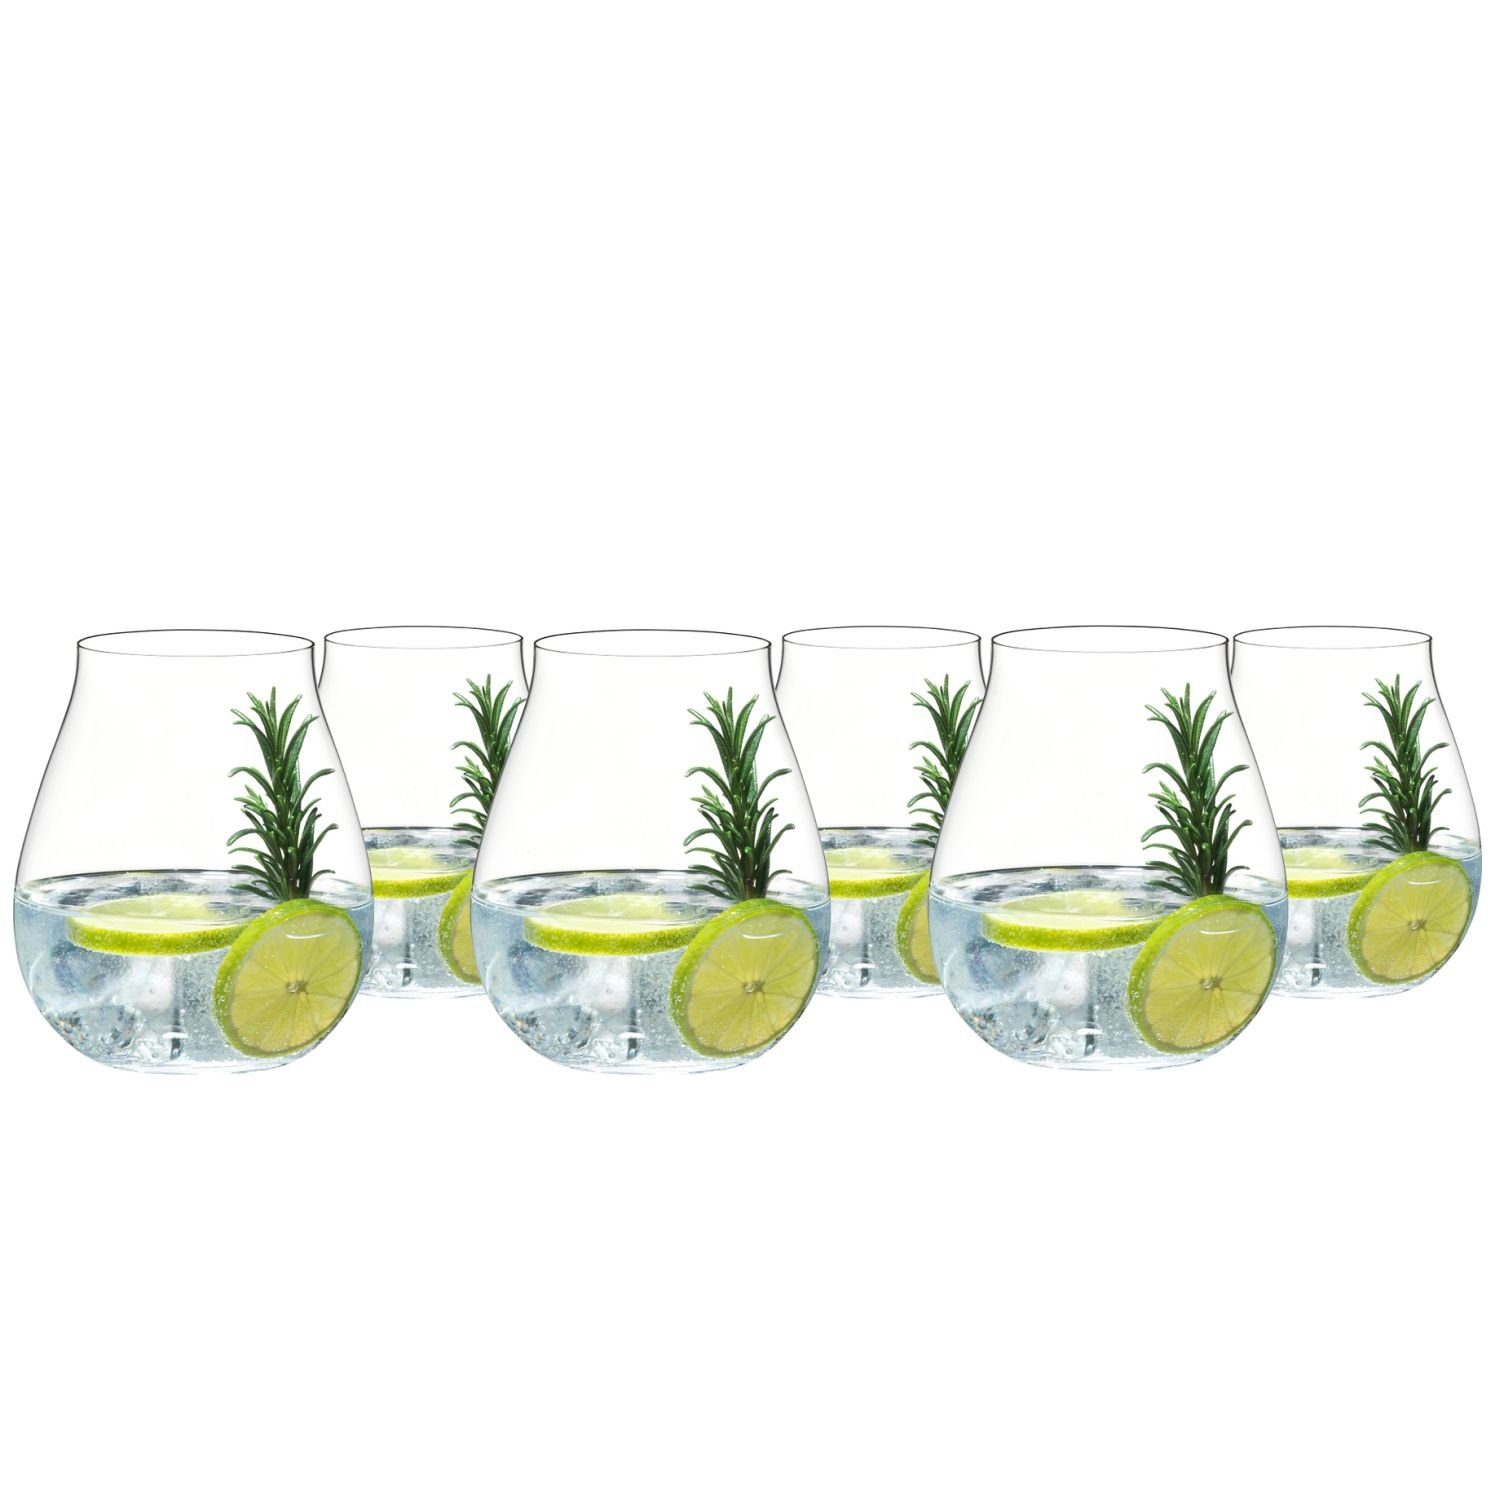 RIEDEL THE WINE GLASS COMPANY Longdrinkglas O Gin, Kristallglas, 6er Set